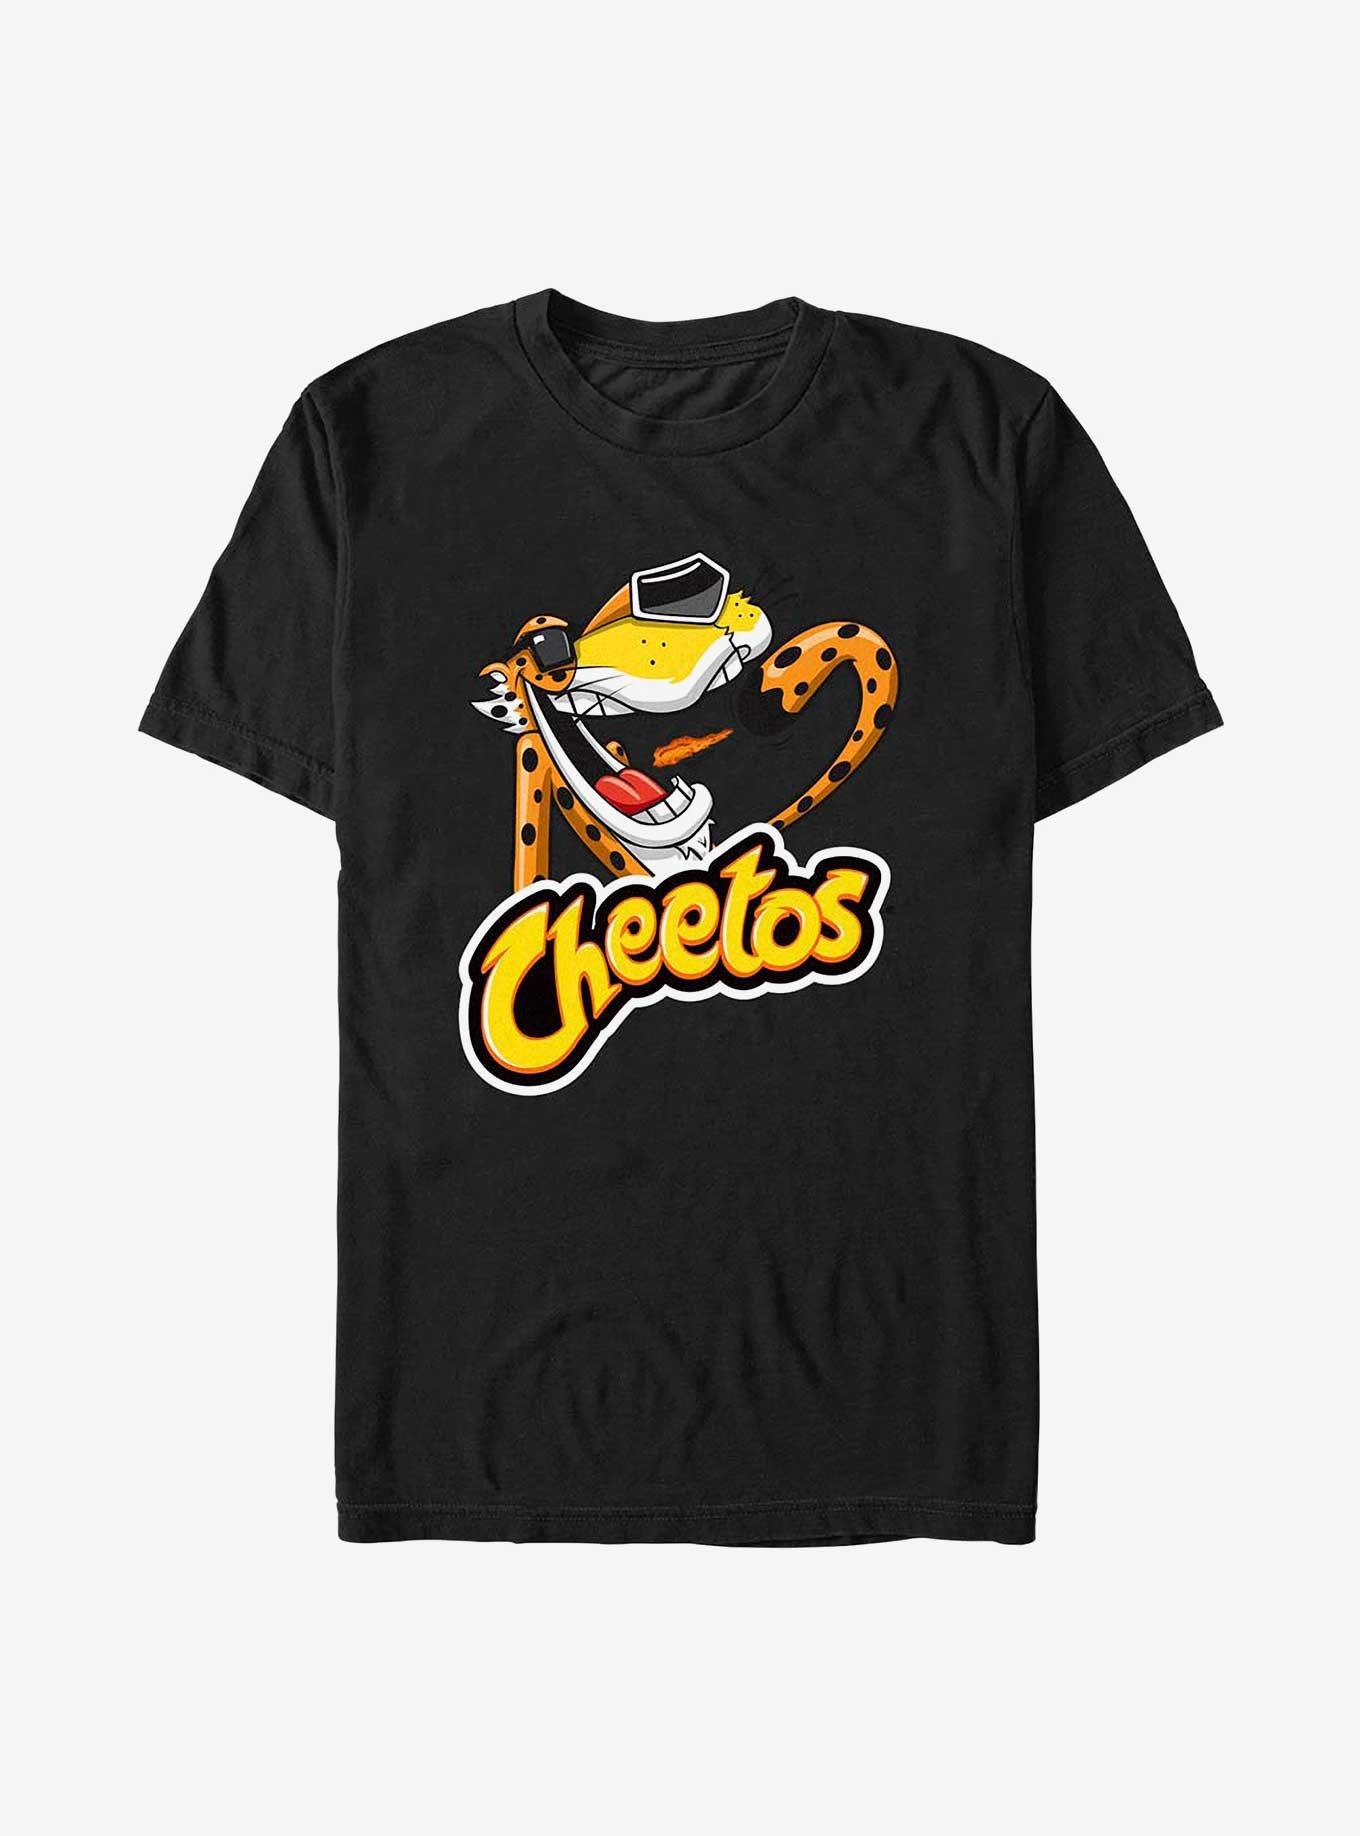 Cheetos Chester Cheetah T-Shirt, BLACK, hi-res